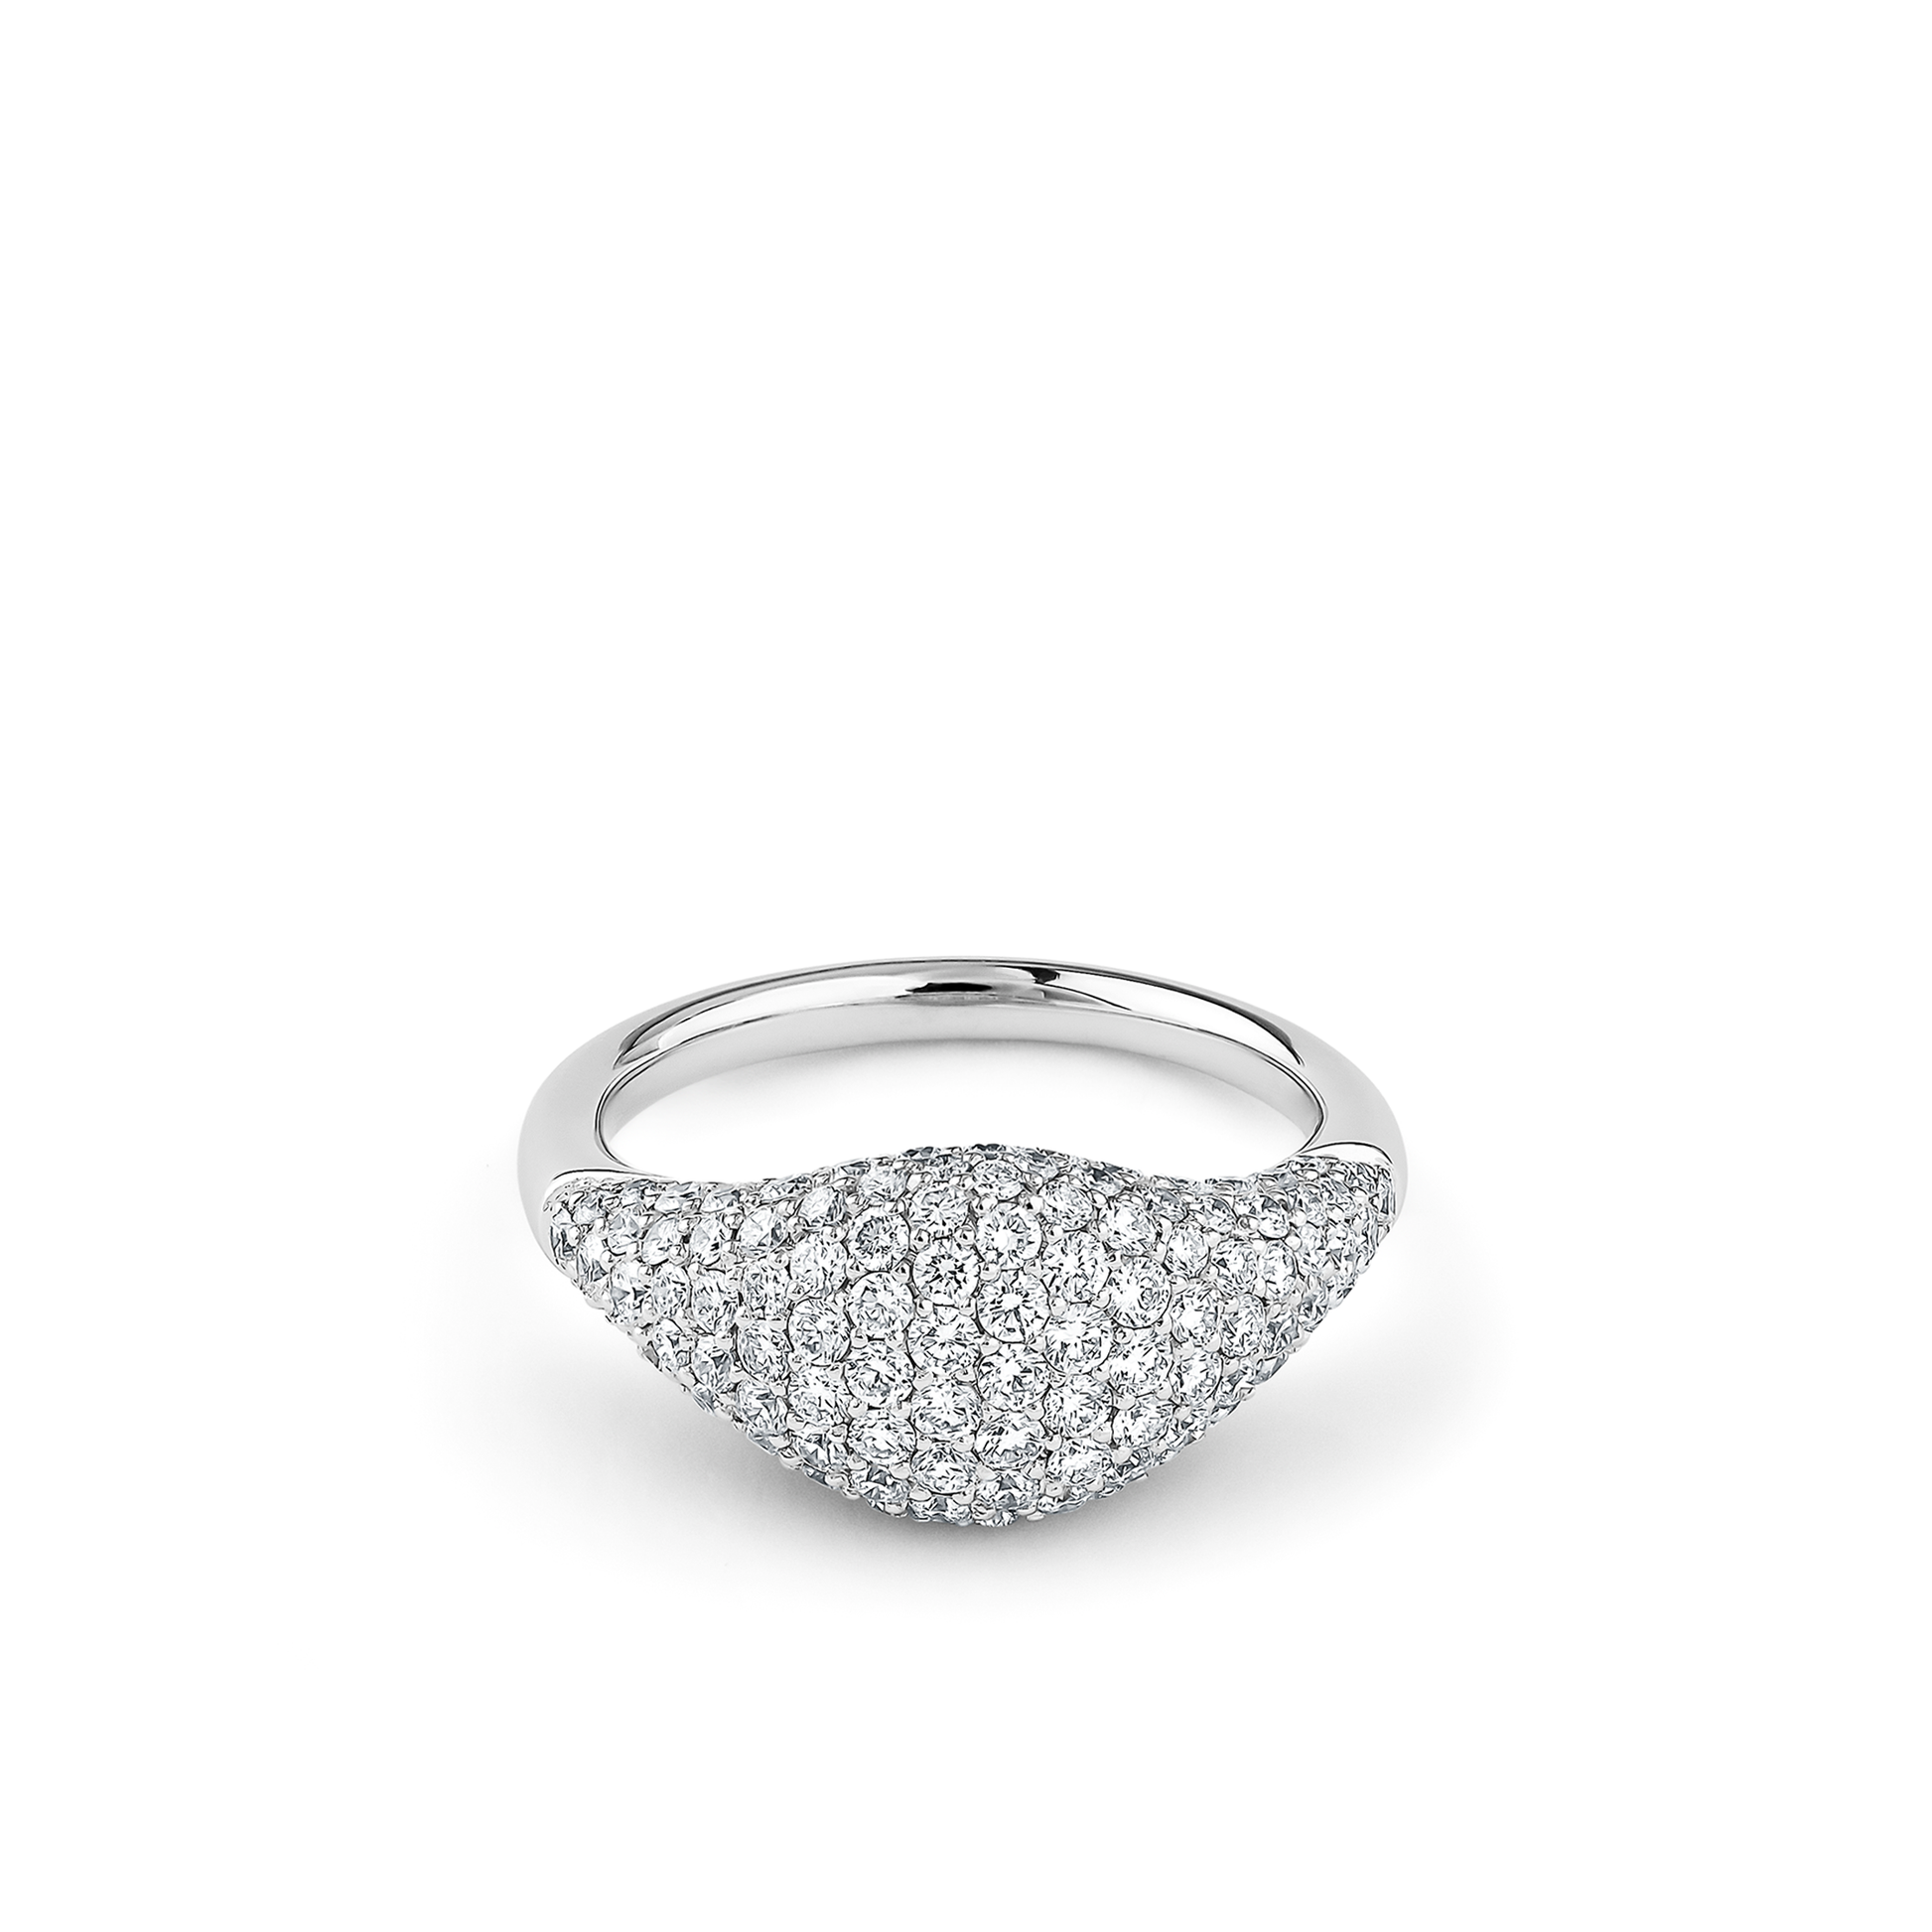 Oliver Heemeyer Cavalier white diamond ring S in 18k white gold set with white diamonds.